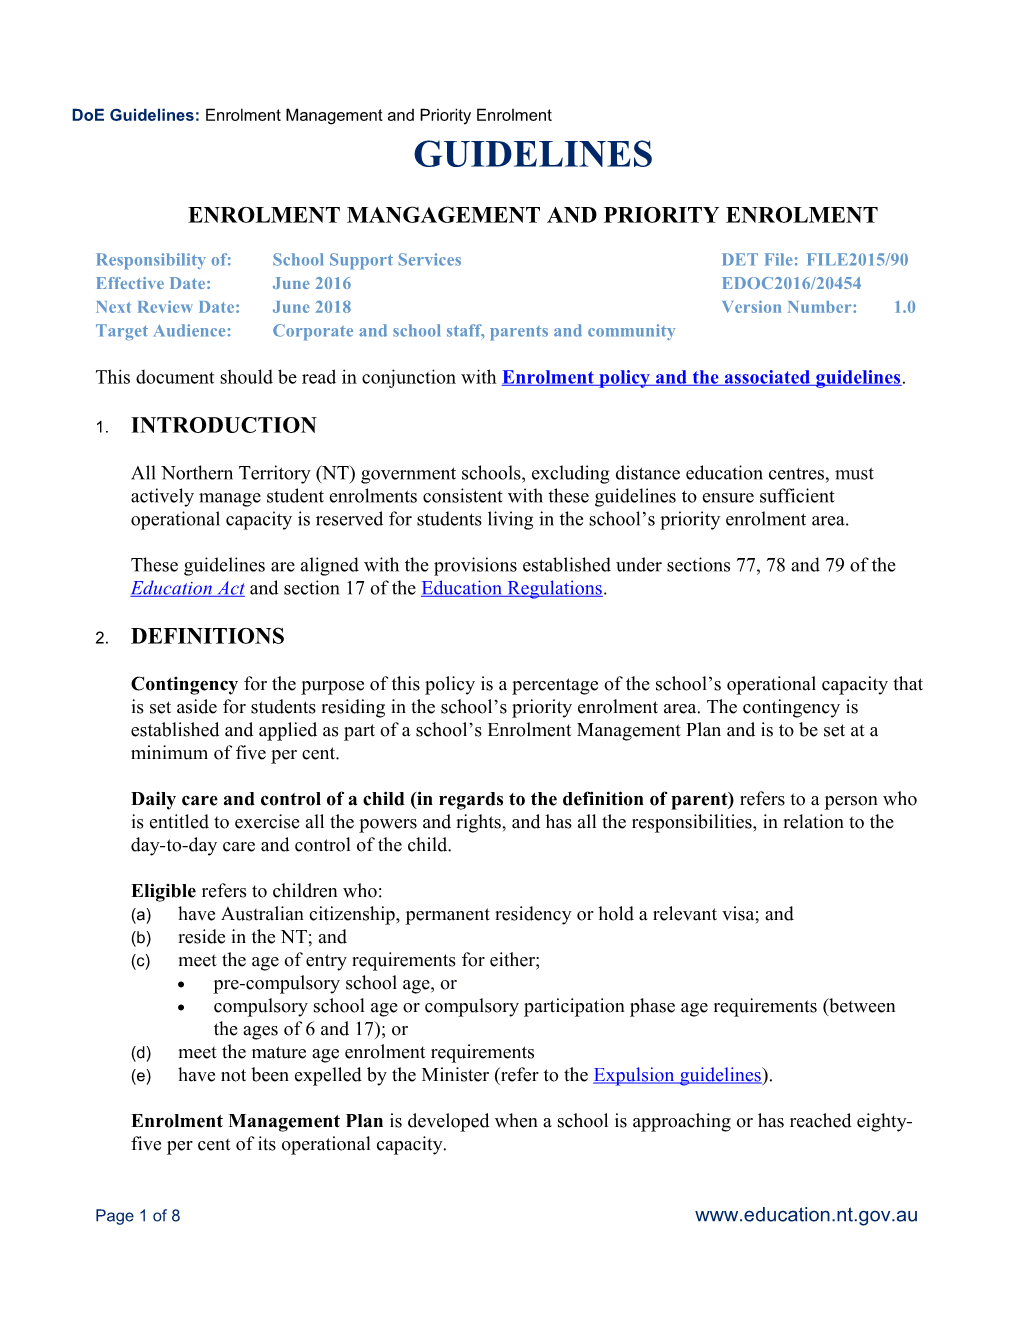 Enrolment Management and Priority Enrolment Guidelines